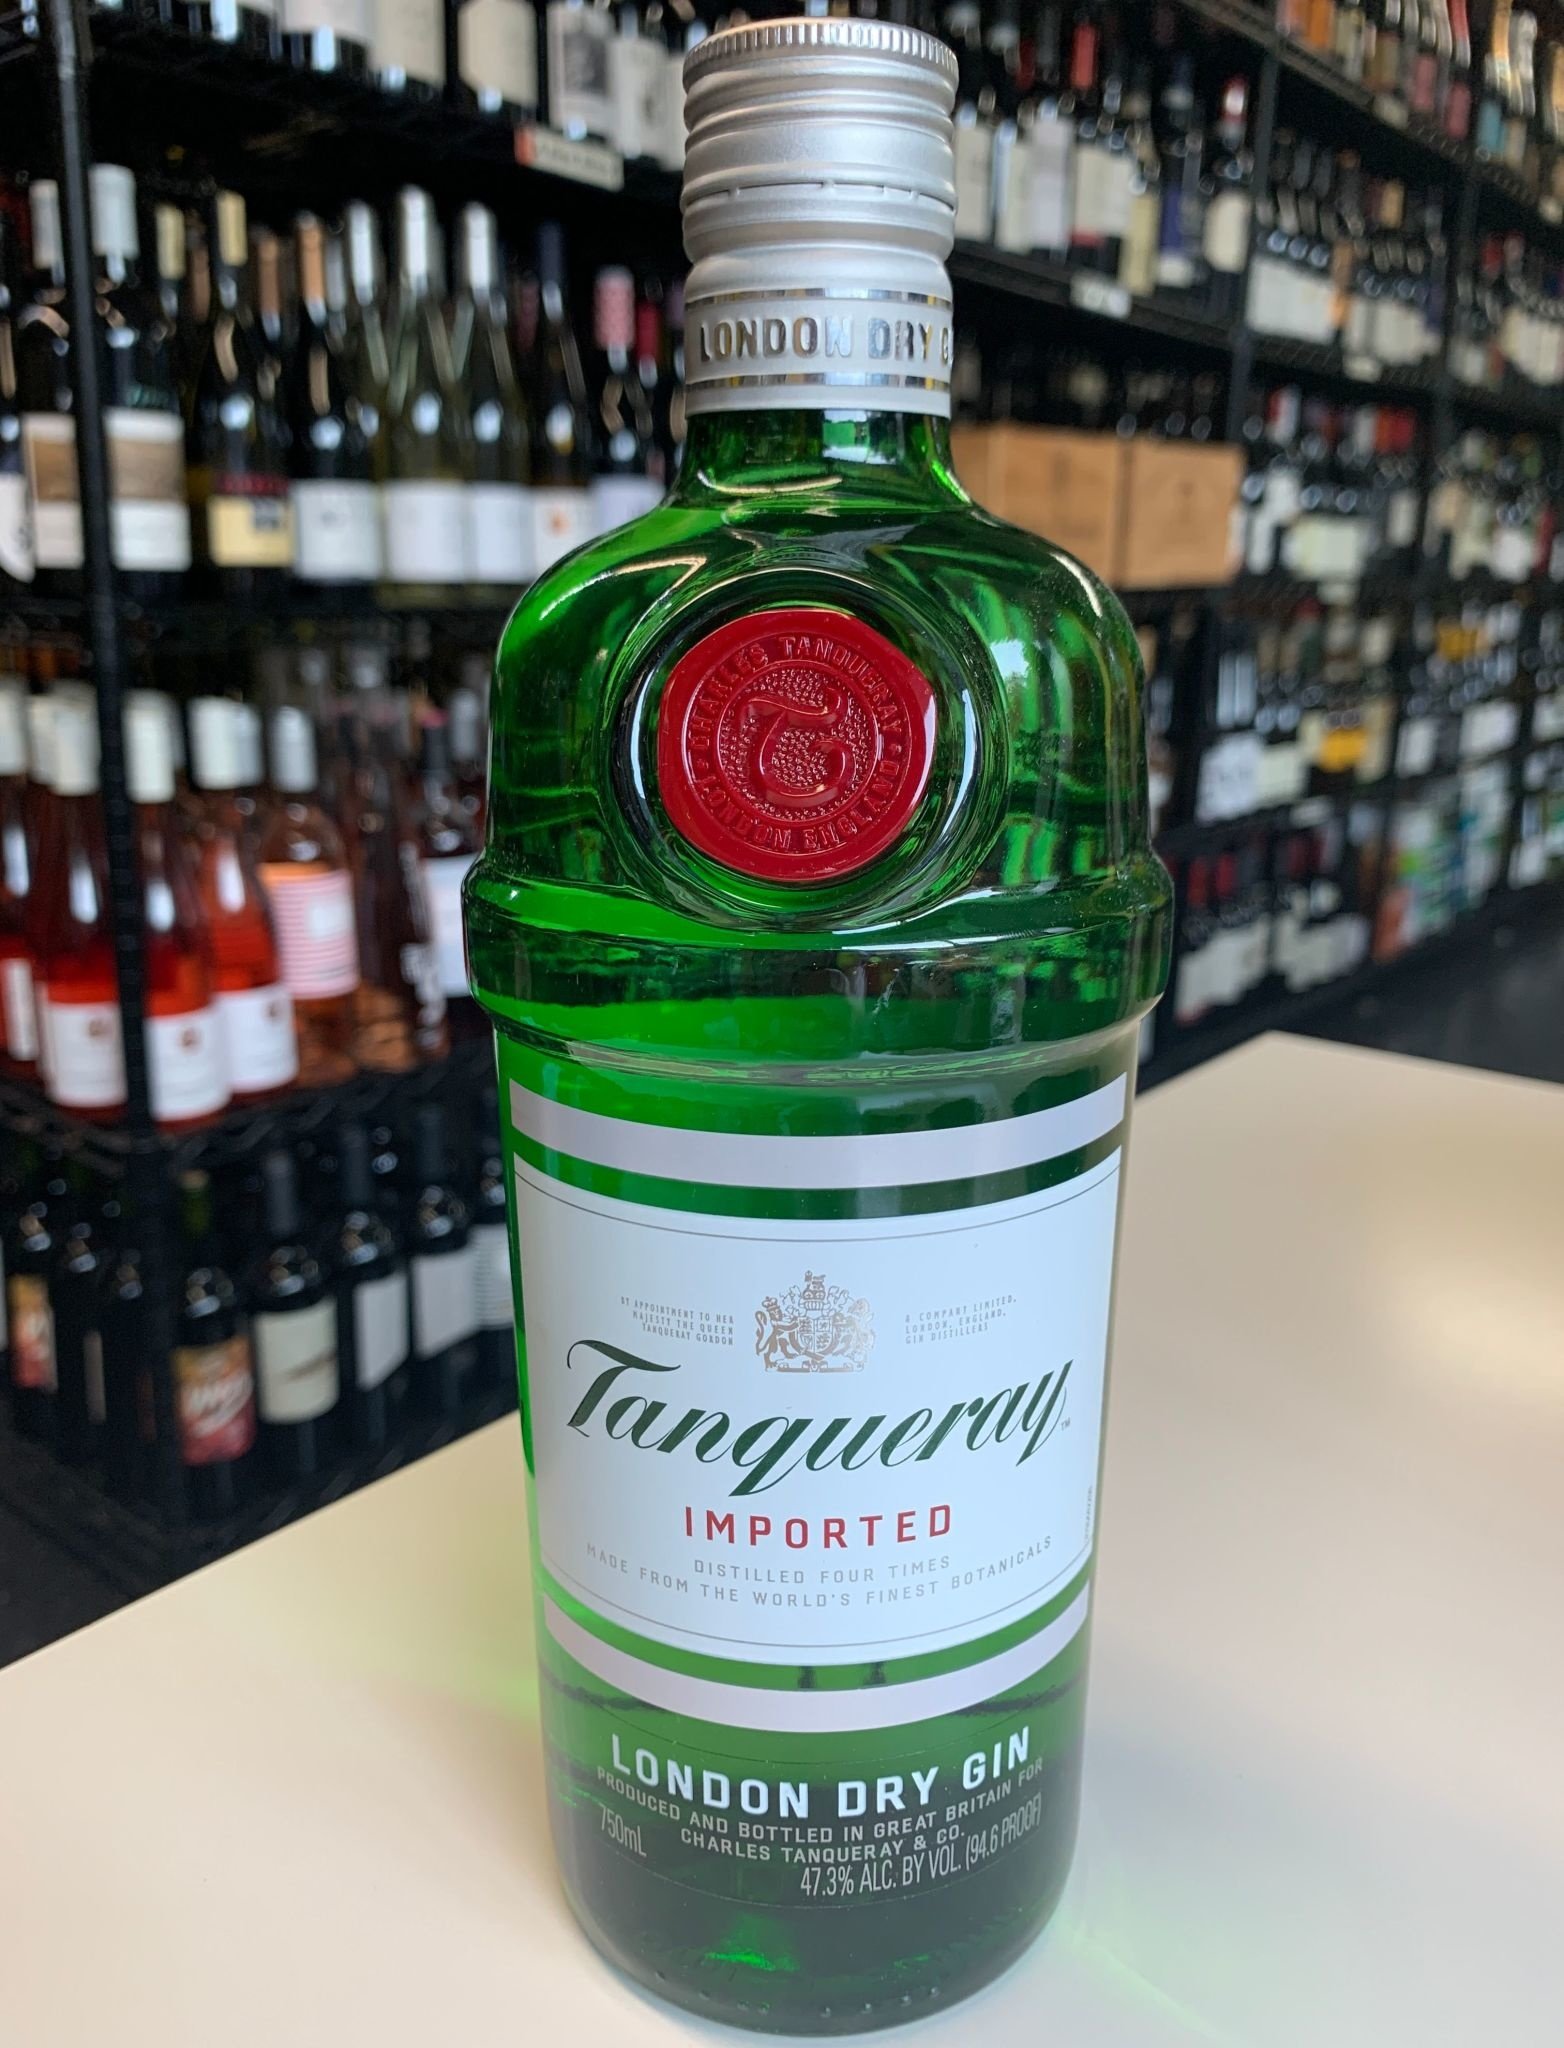 Tanqueray London Dry Gin 375ml - Divino